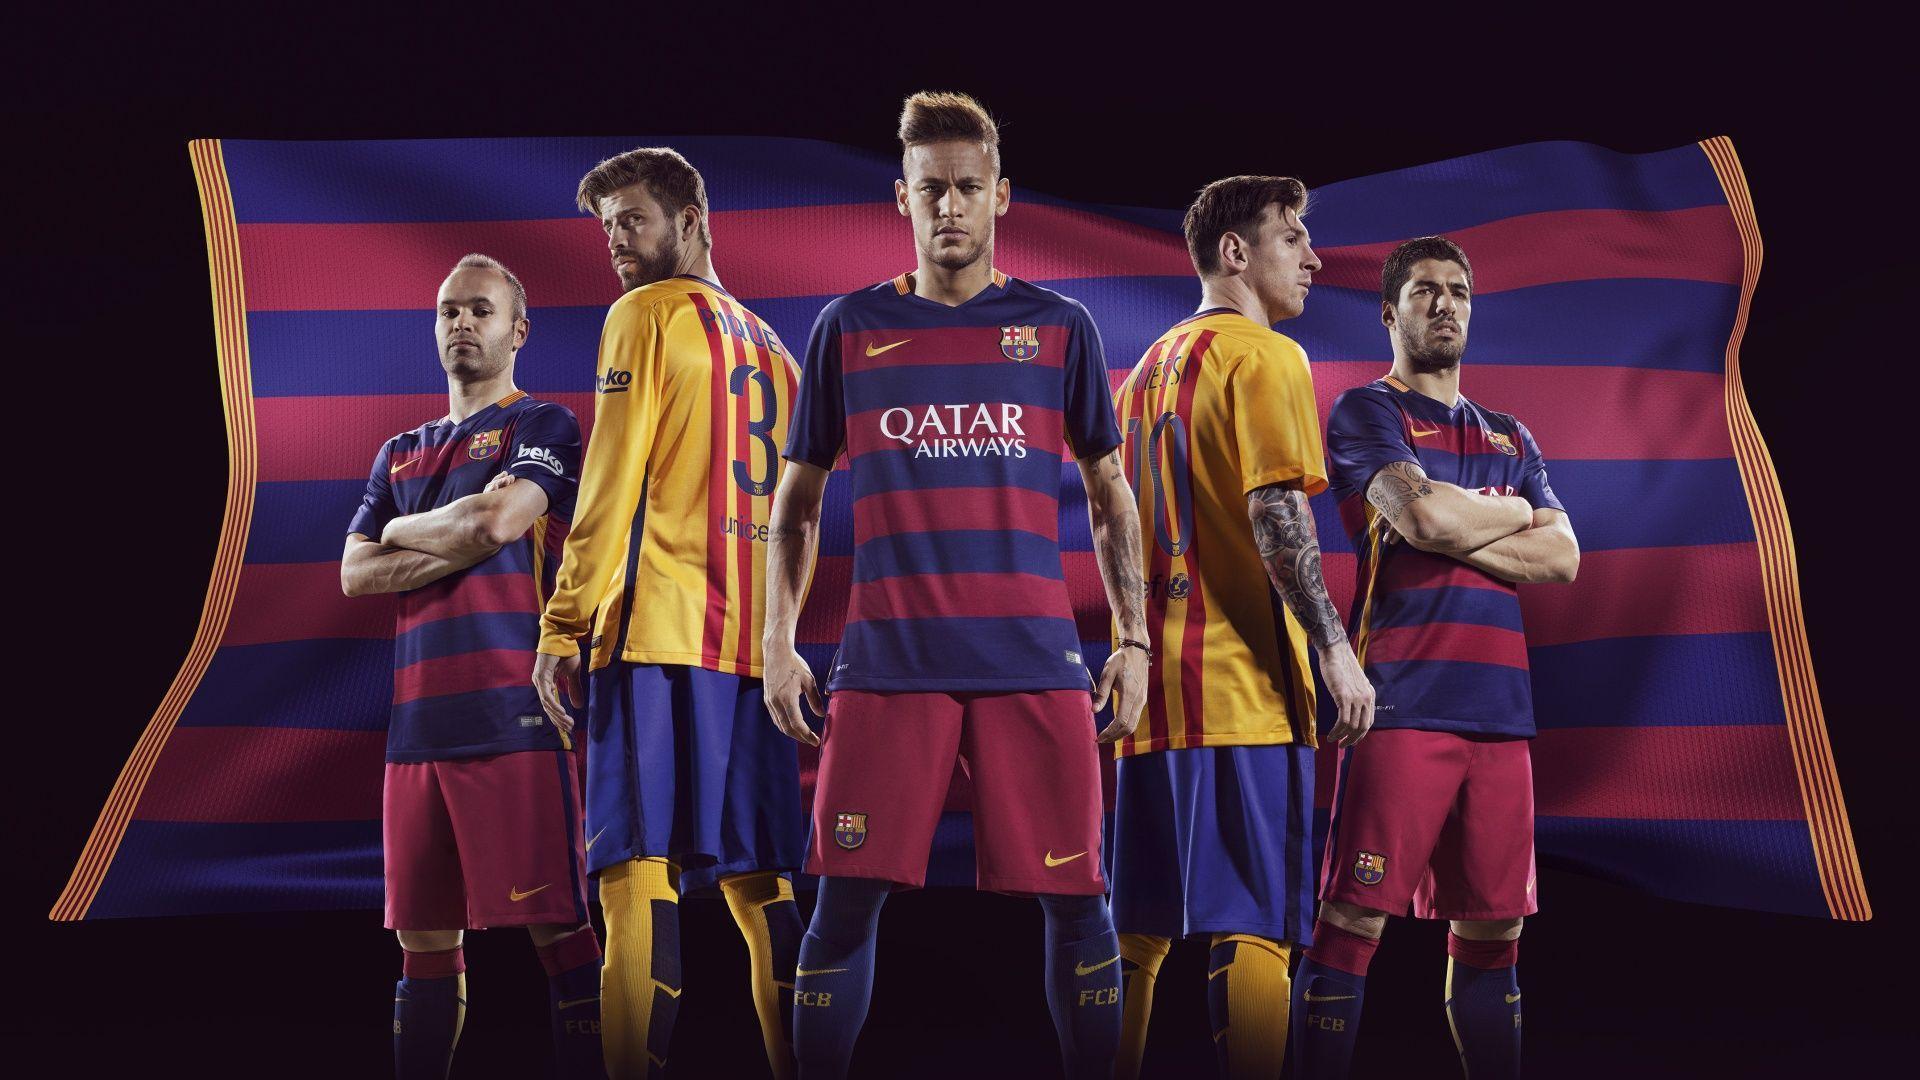 FC Barcelona Wallpaper HD. HD Wallpaper, Background, Image